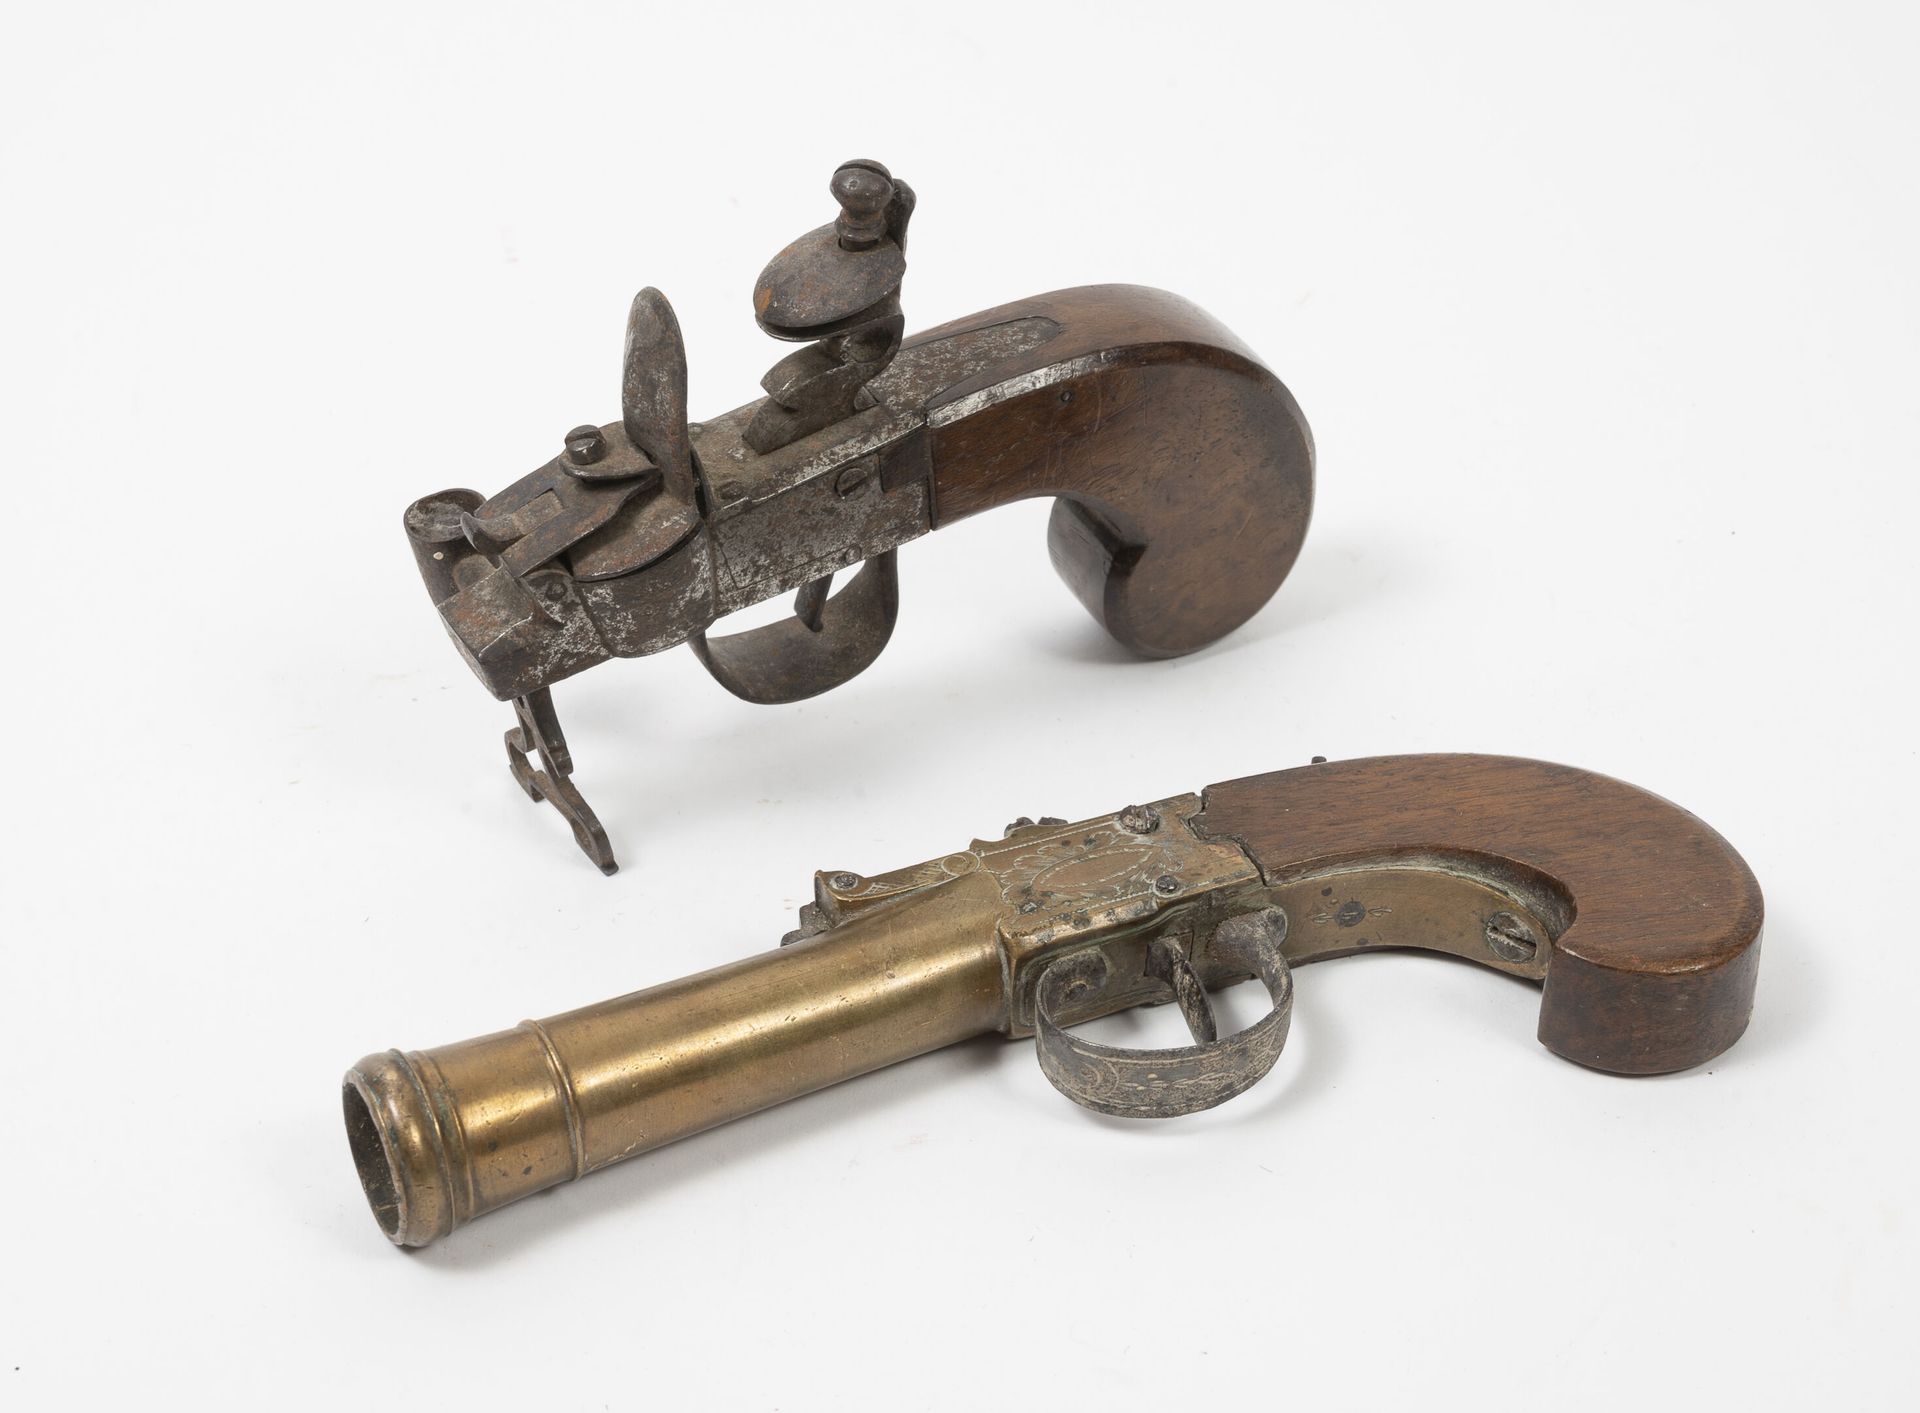 ANGLETERRE (?), début du XIXème siècle Pistola marina con caja.

Cañón de bronce&hellip;